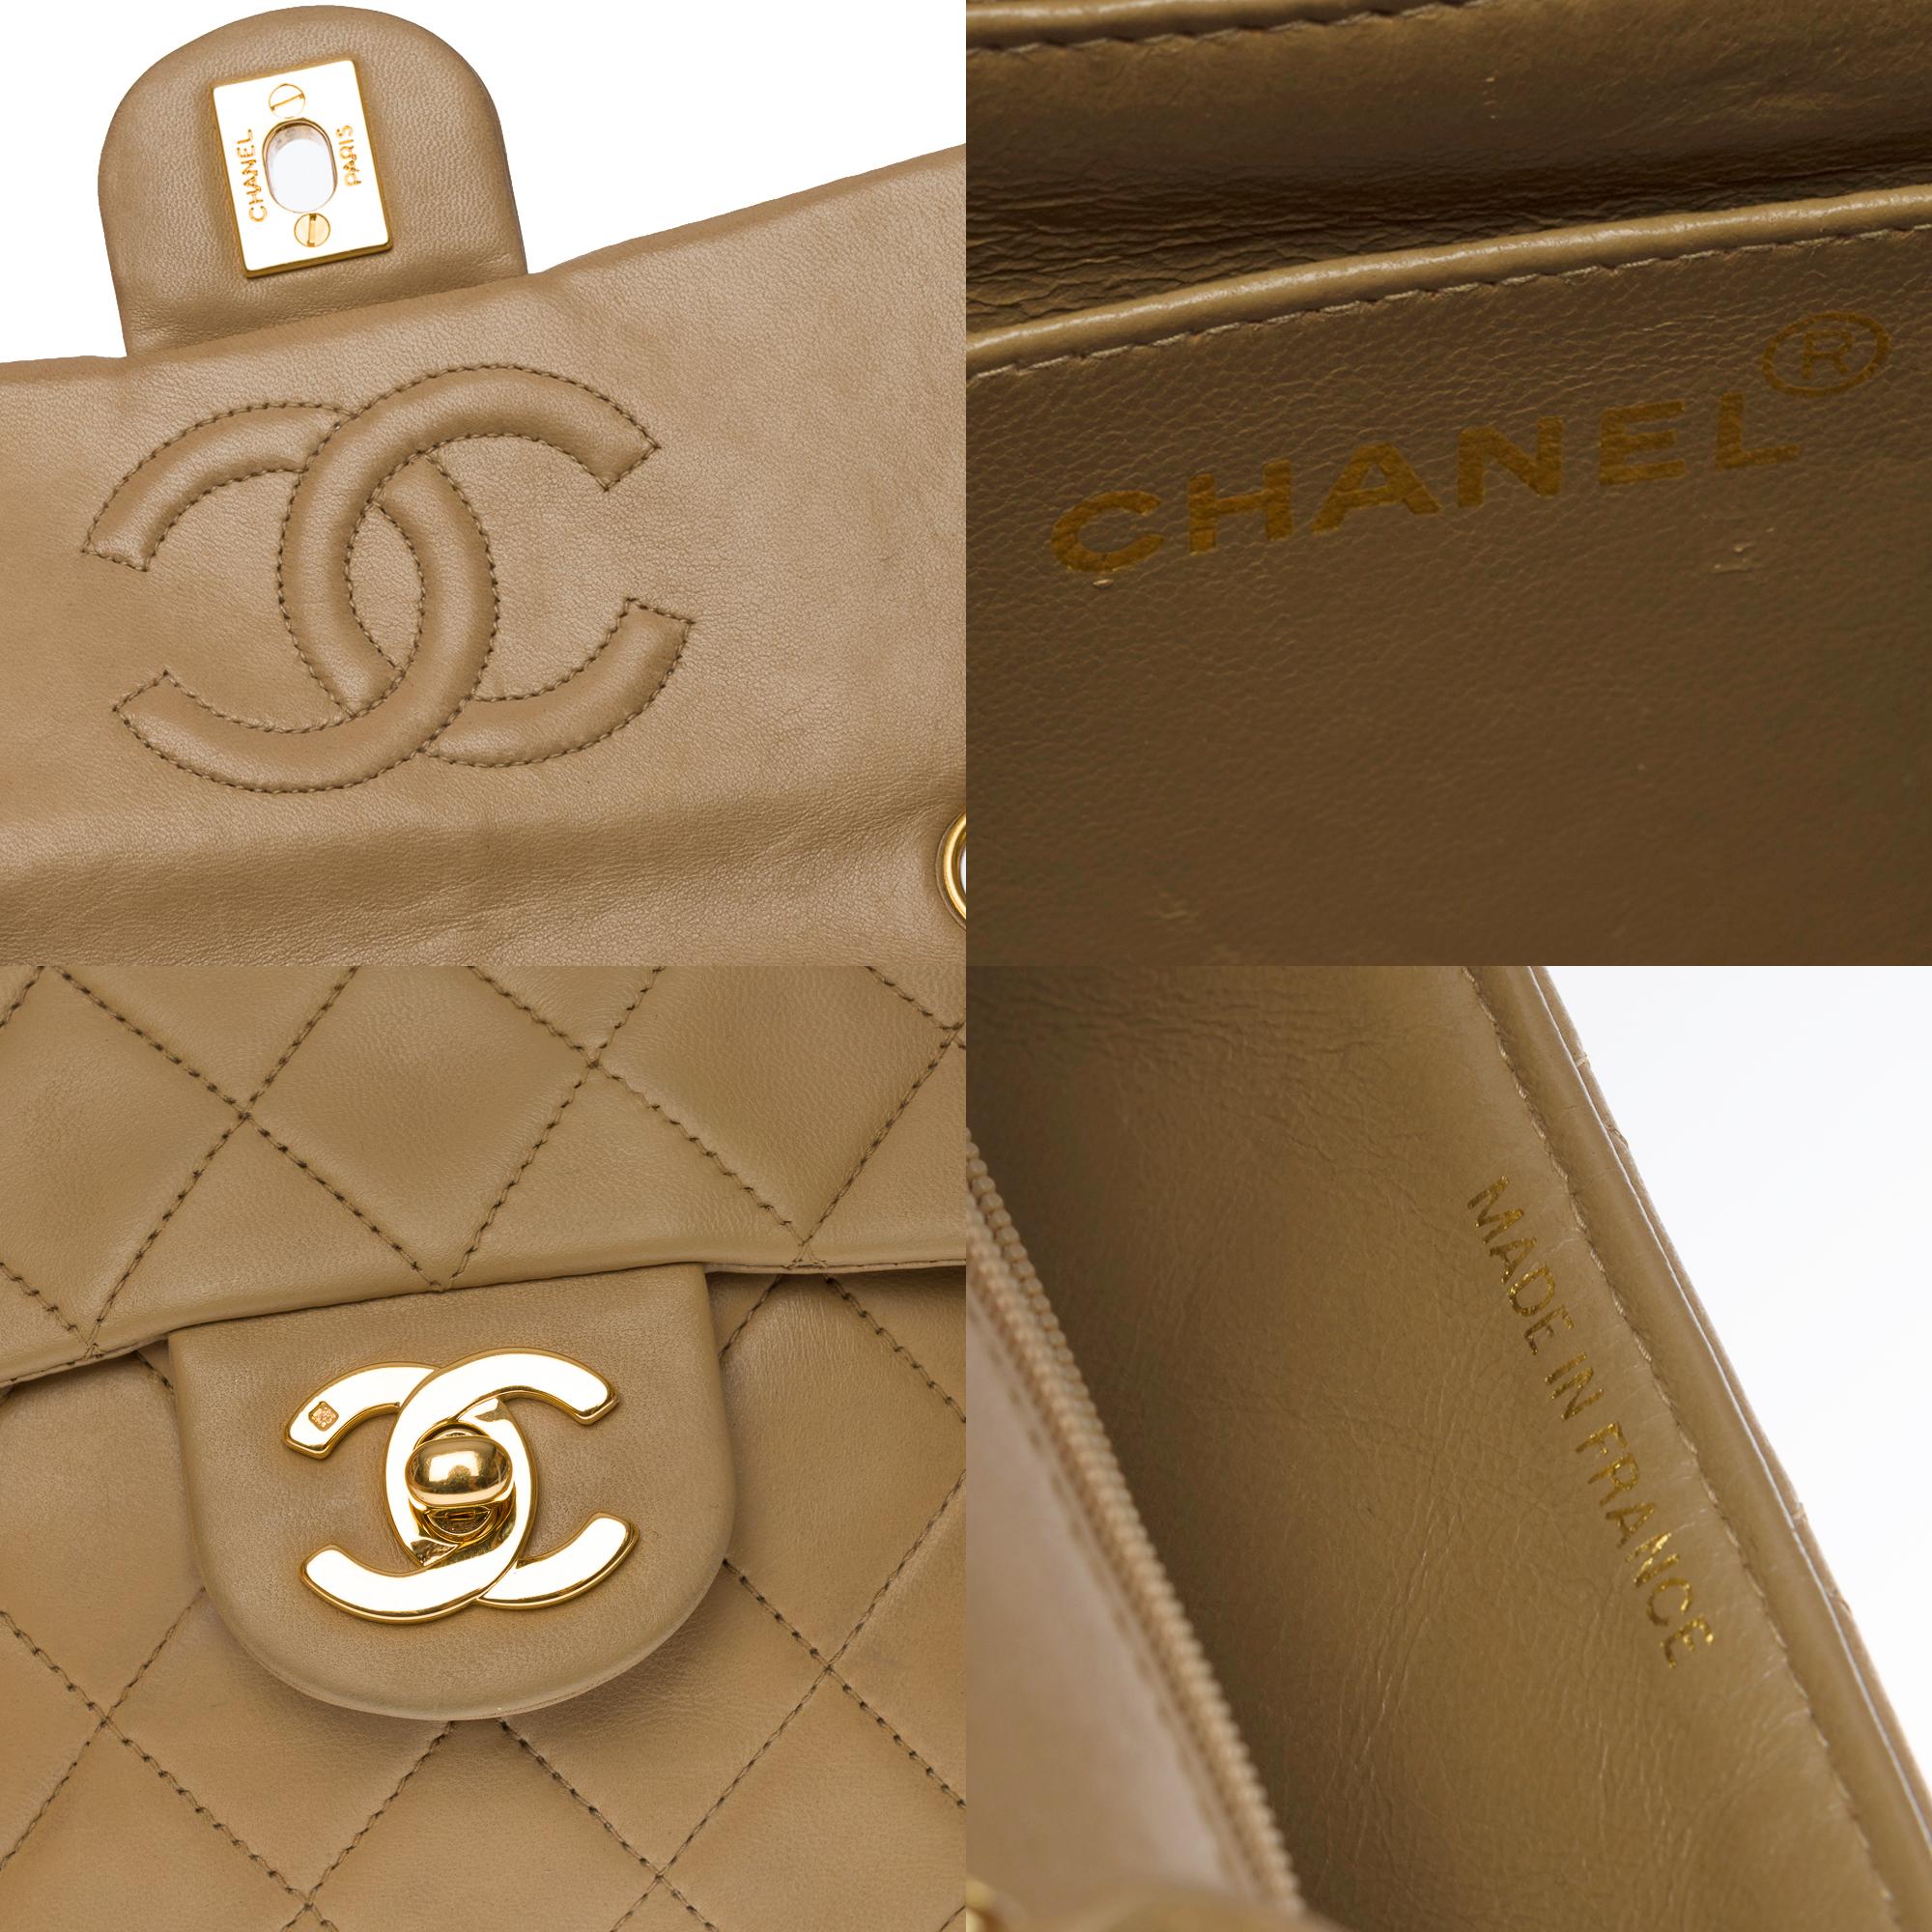 Splendid Chanel Timeless Mini Flap bag in beige quilted lambskin, GHW 2